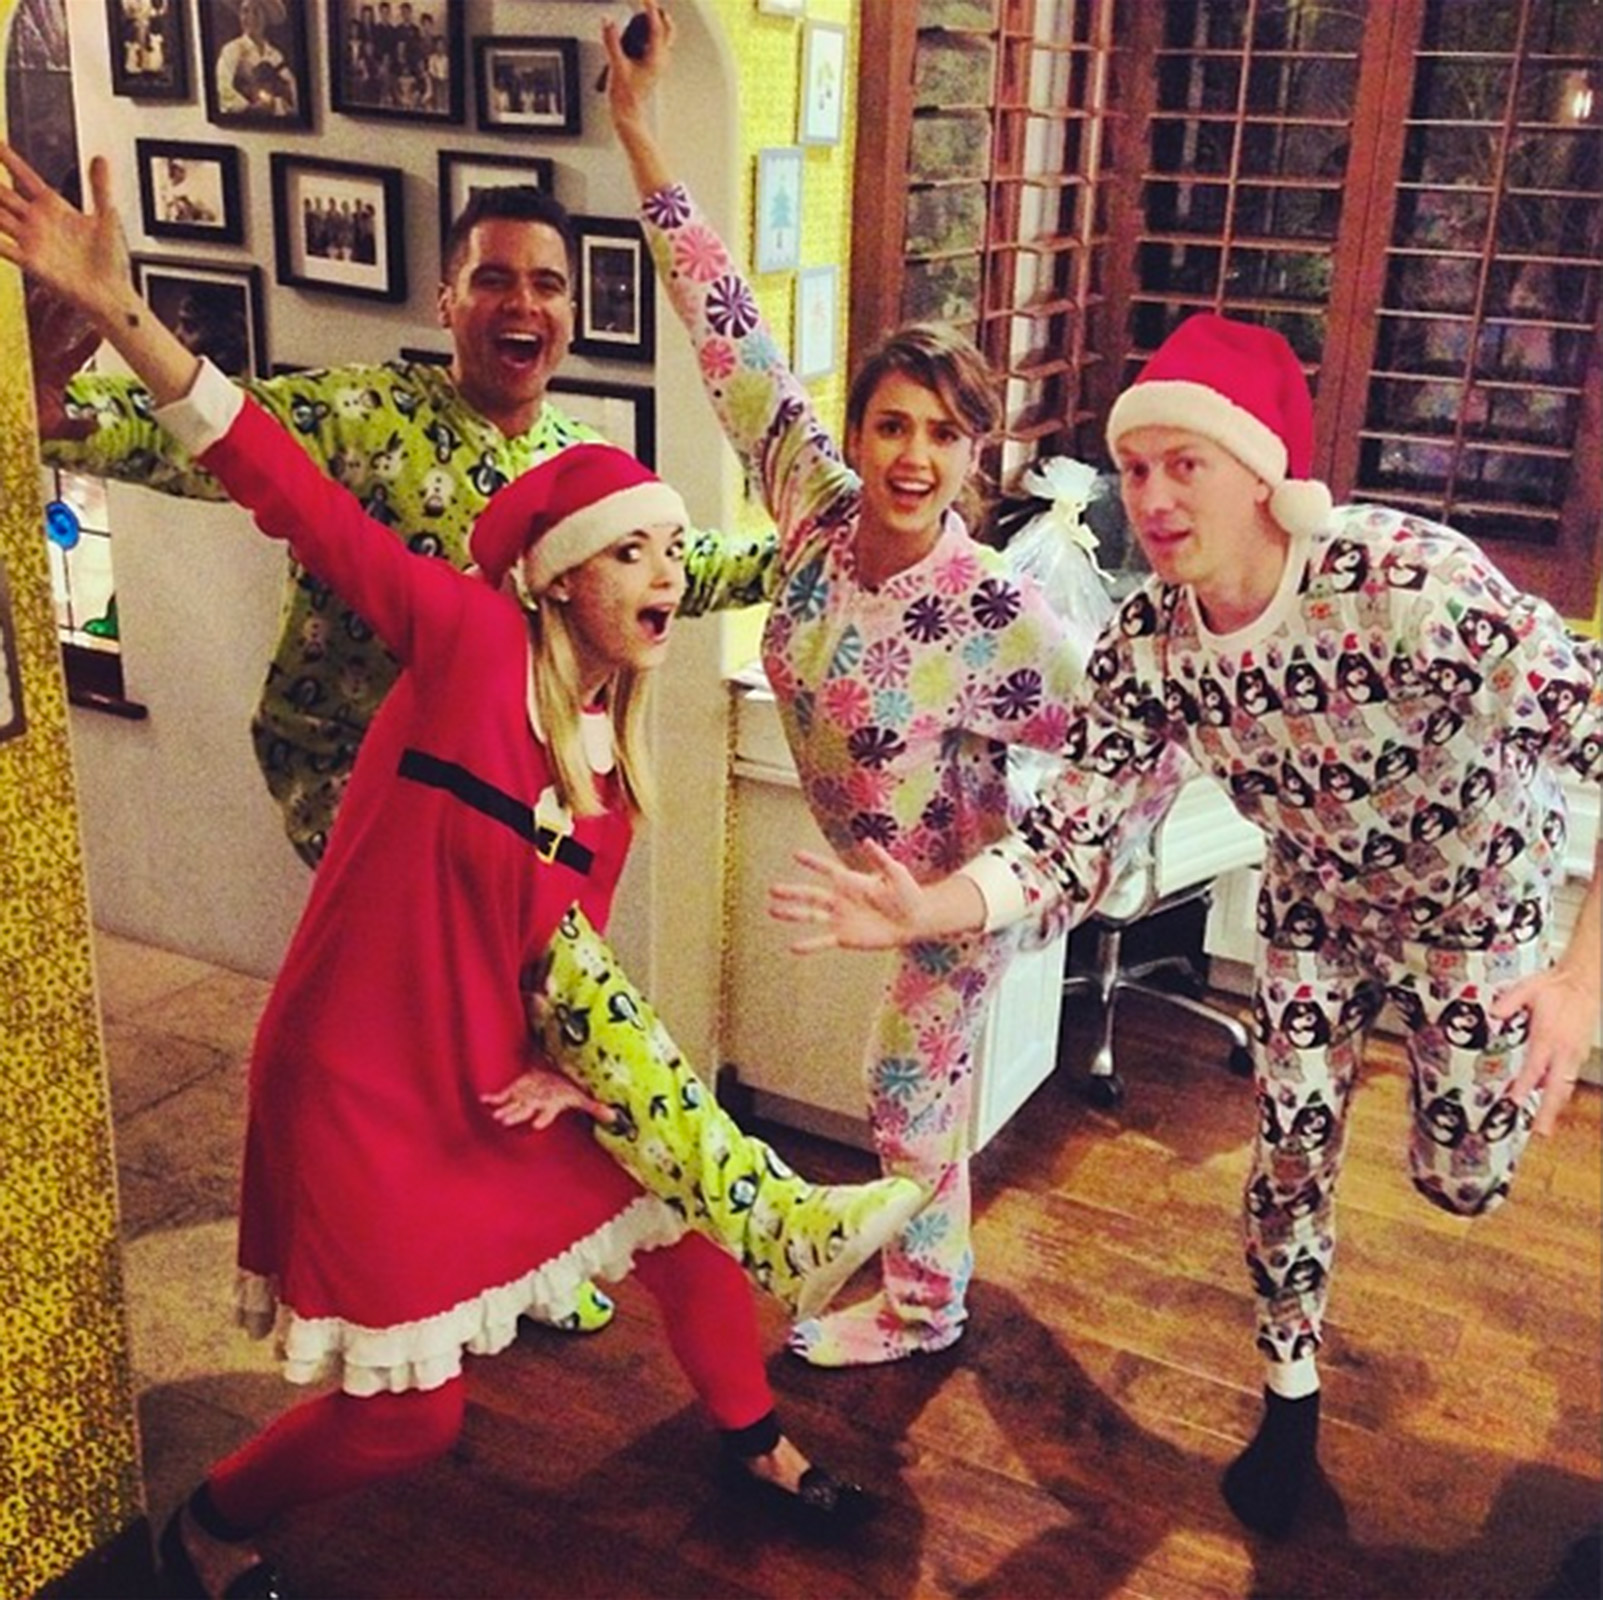 Celebrities Wearing Matching Holiday, Christmas Pajamas: Pics